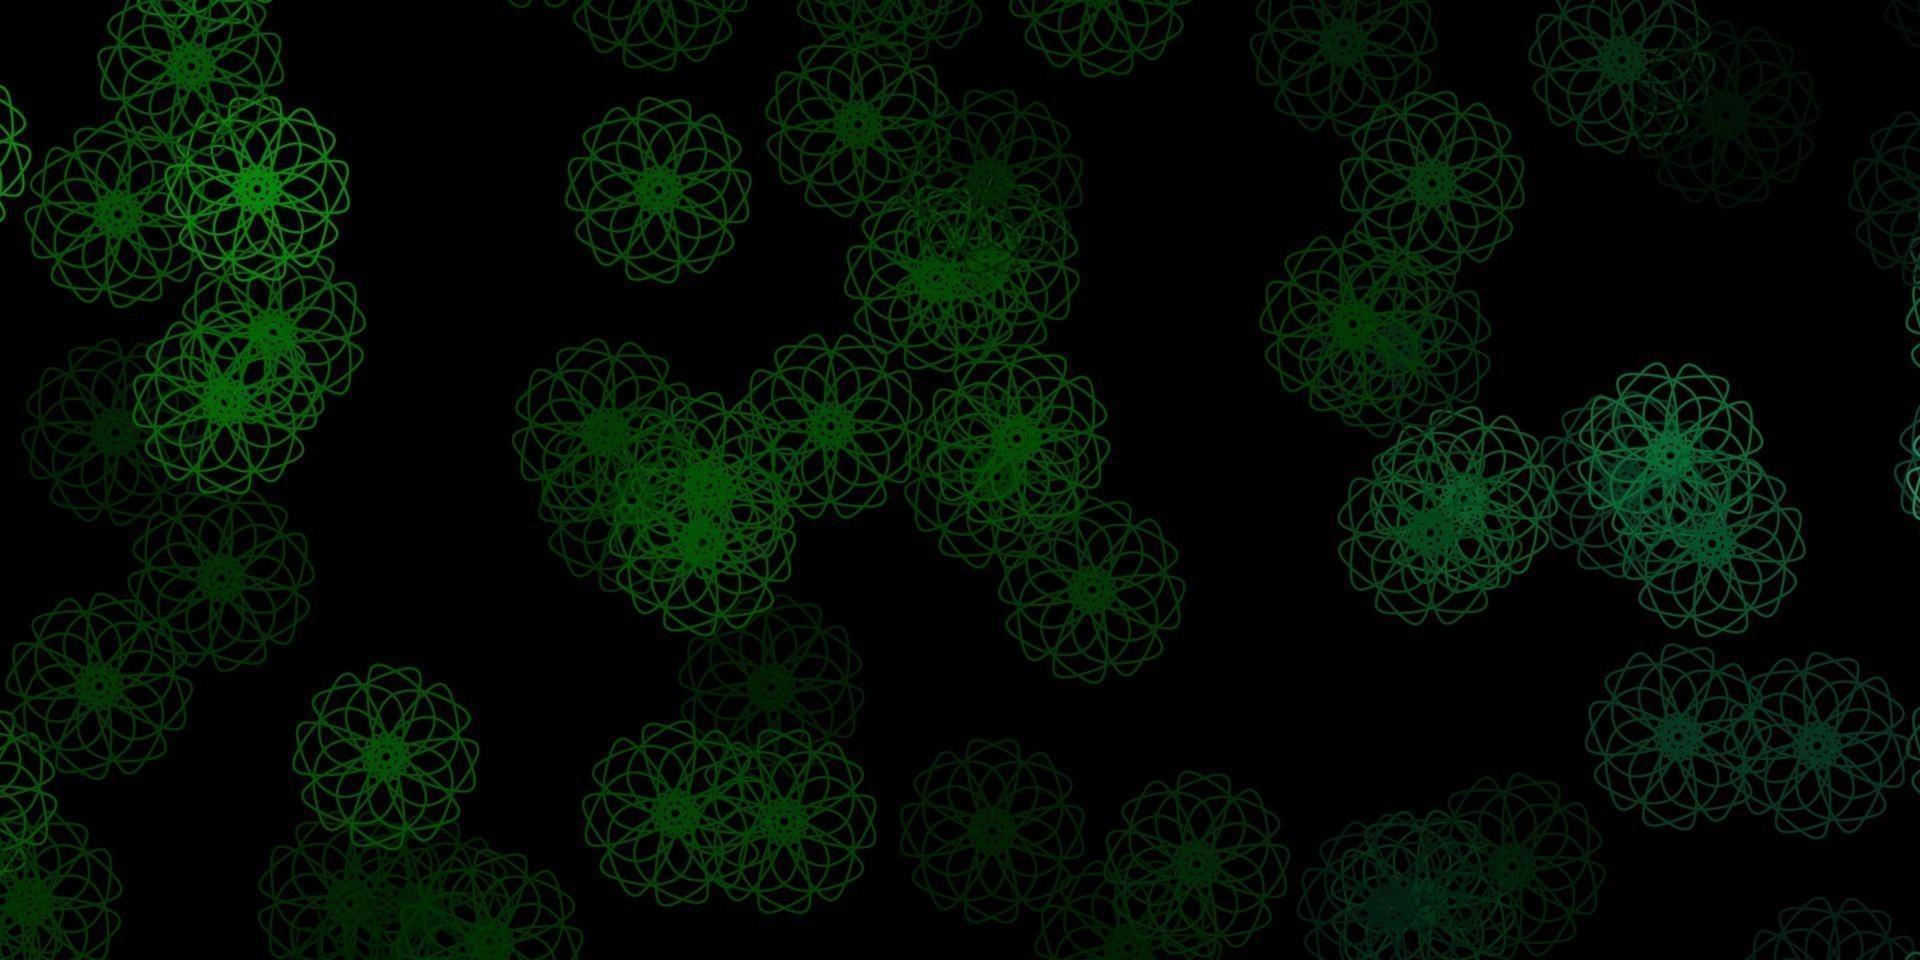 modelo de vetor verde escuro com formas abstratas.